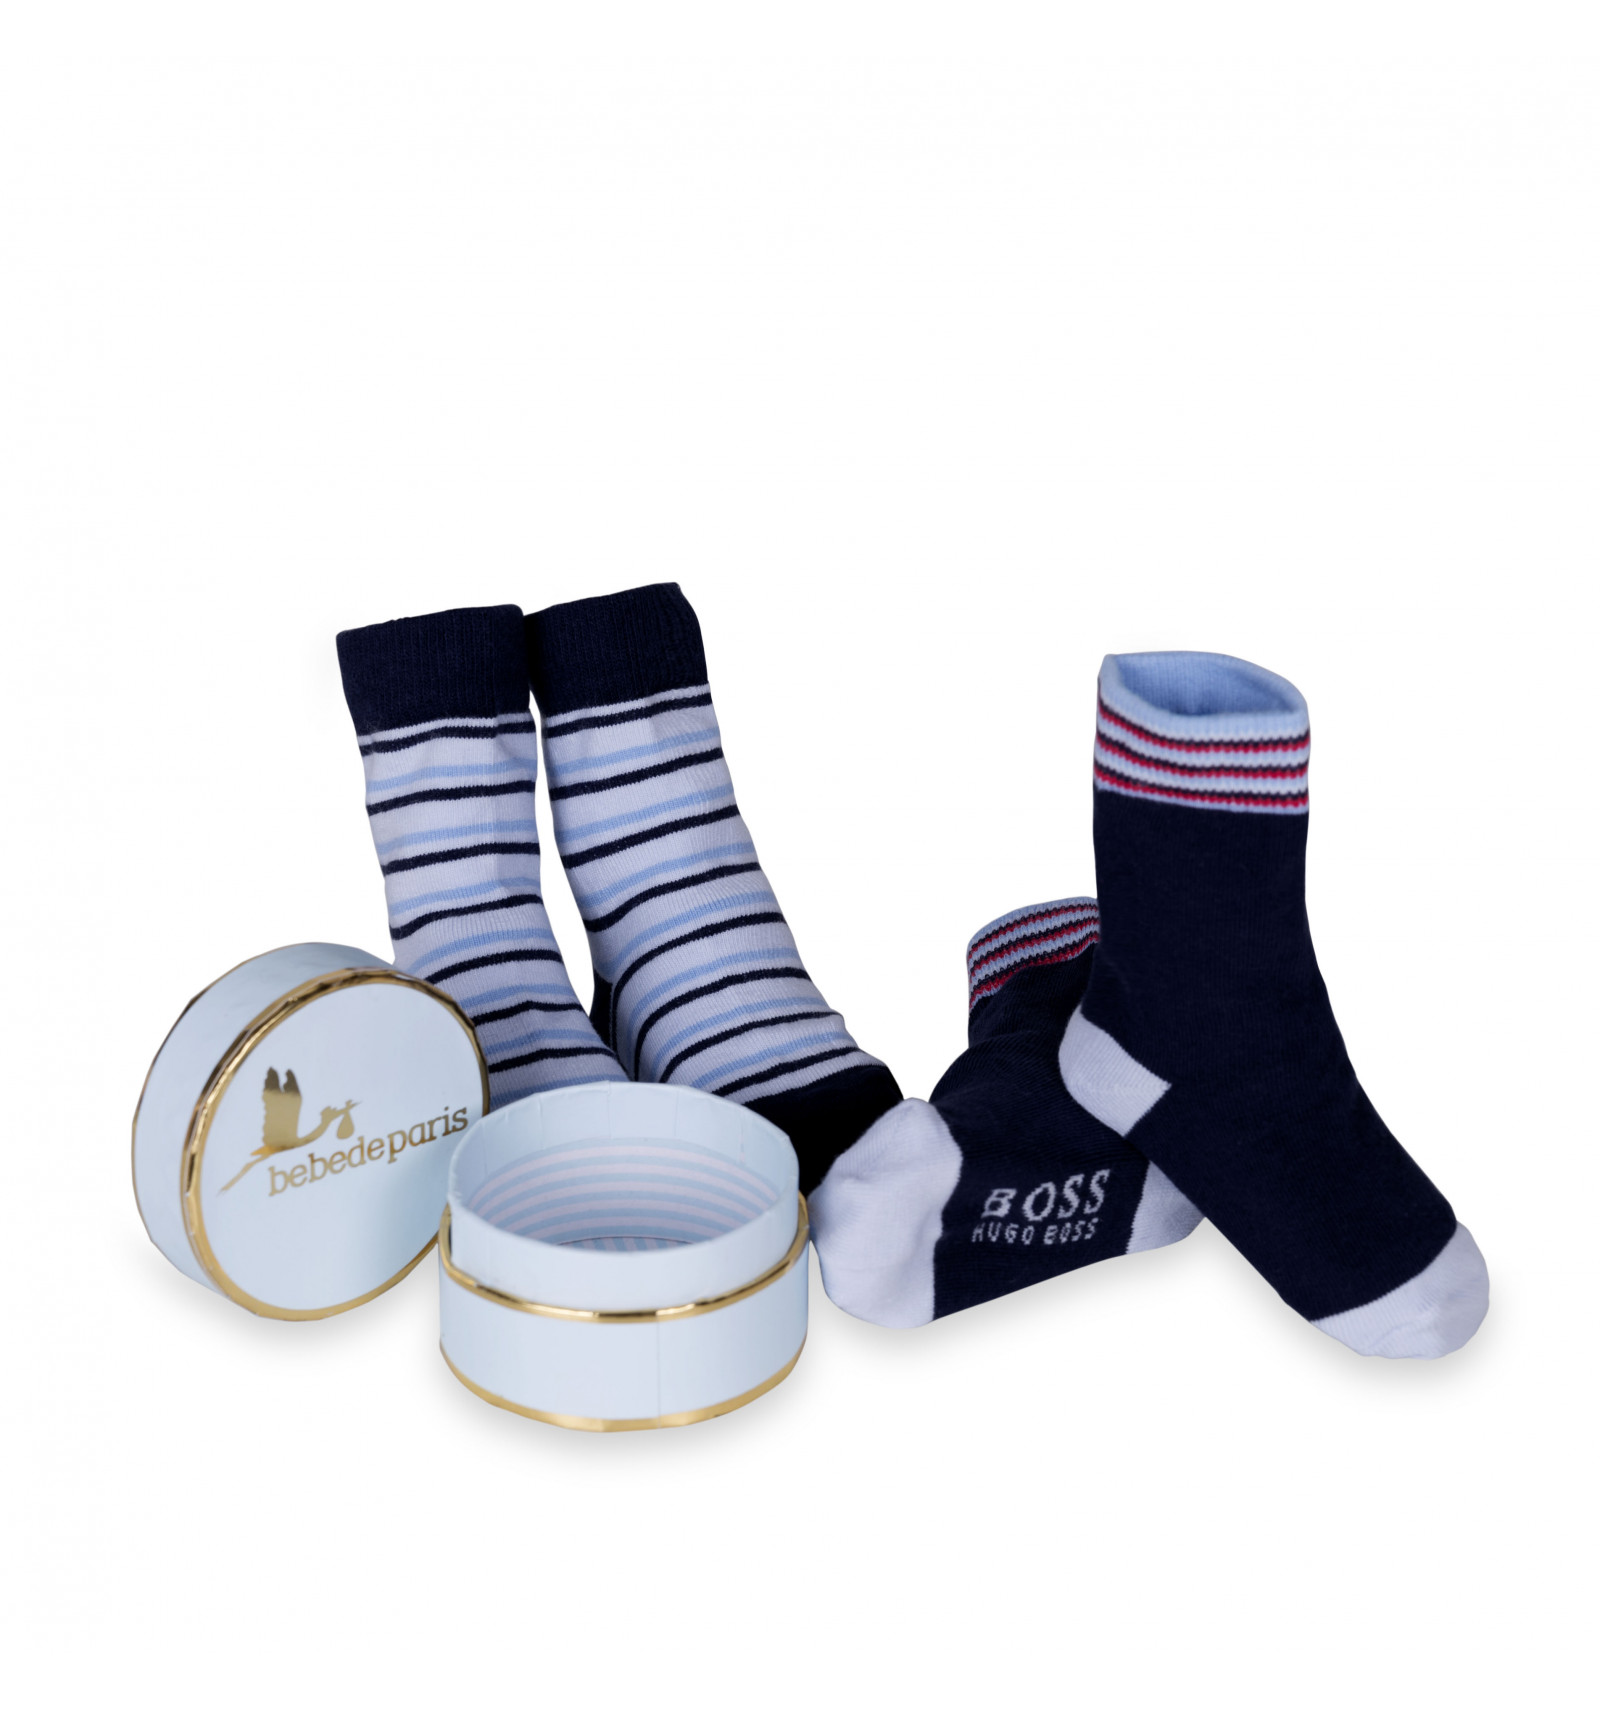 Hugo Boss Baby Socks Set - Bebedeparis UK